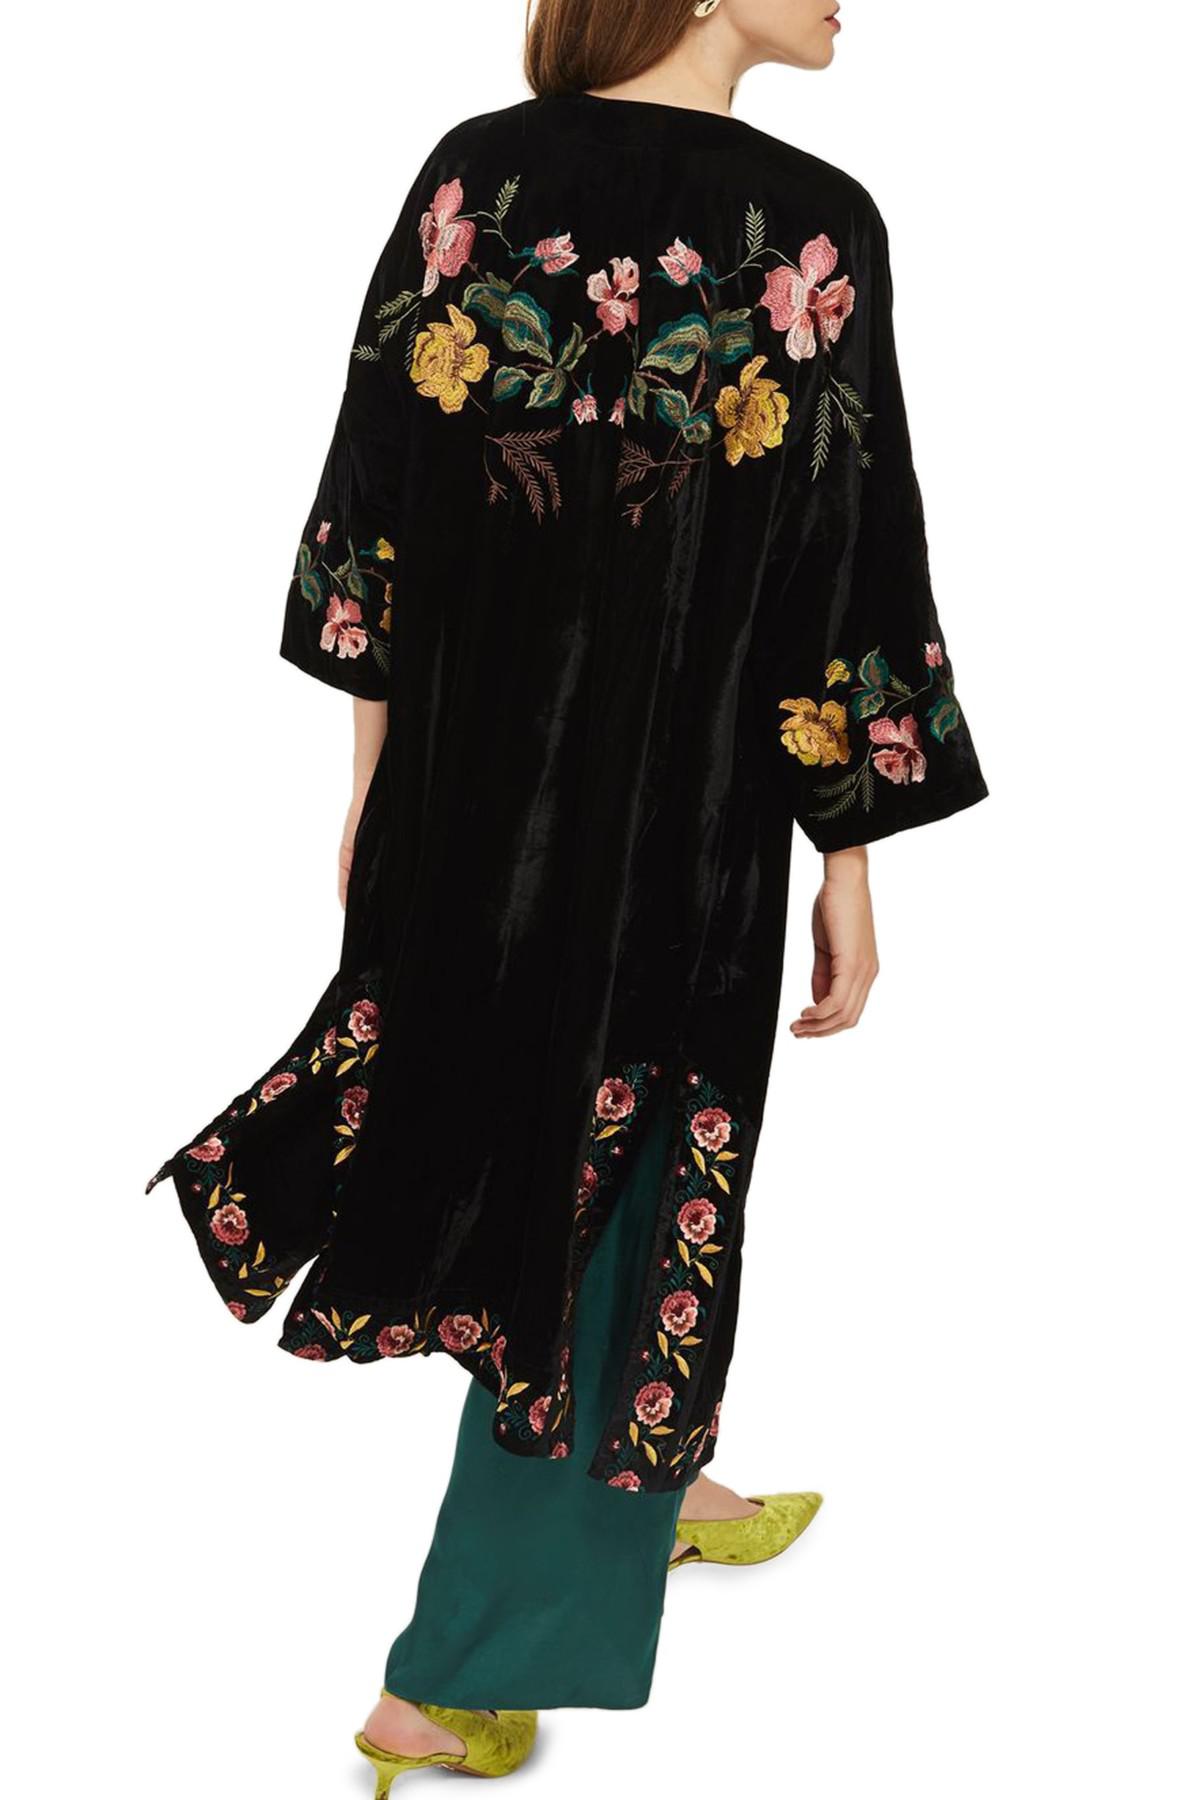 TOPSHOP Floral Embroidered Velvet Kimono in Black - Lyst